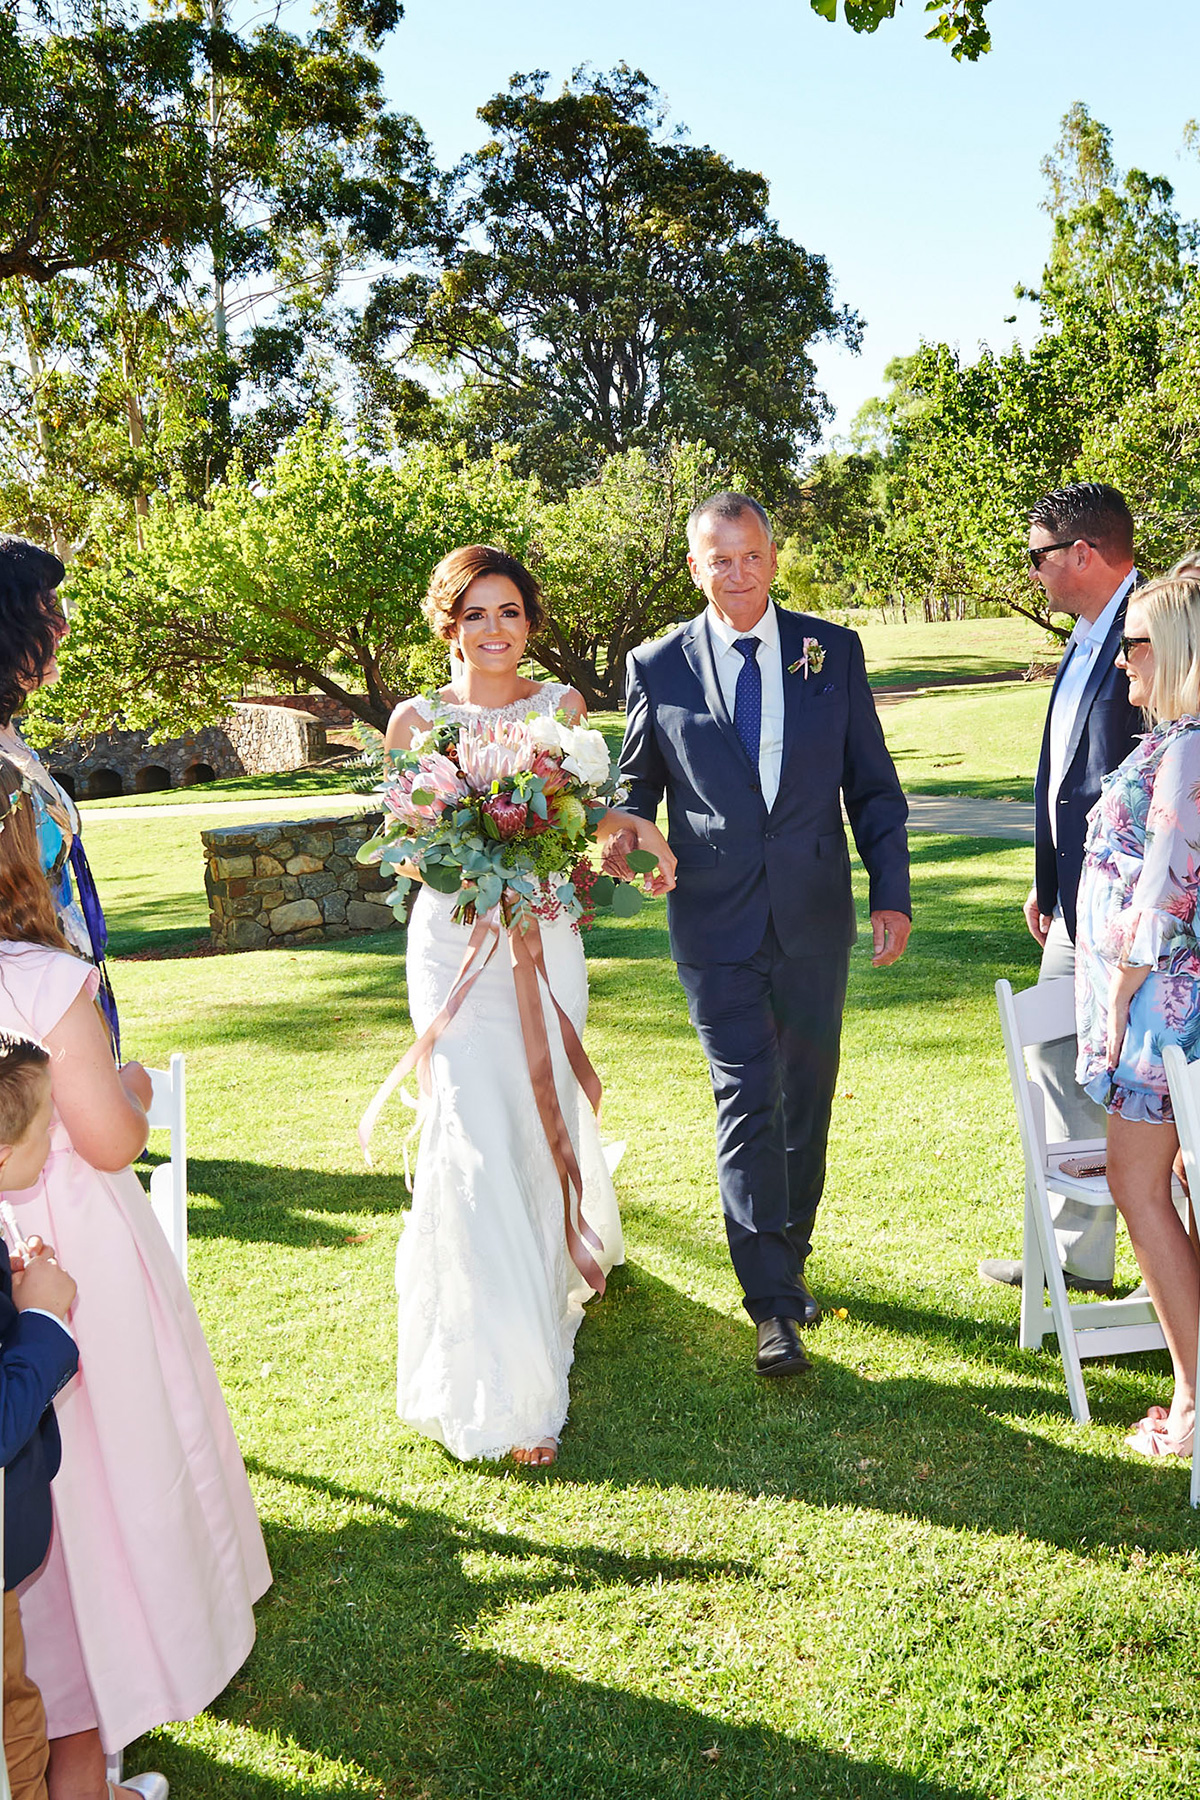 Adelaide_Ben_Rustic-Vineyard-Wedding_Peter-Edwards-Photography_SBS_008